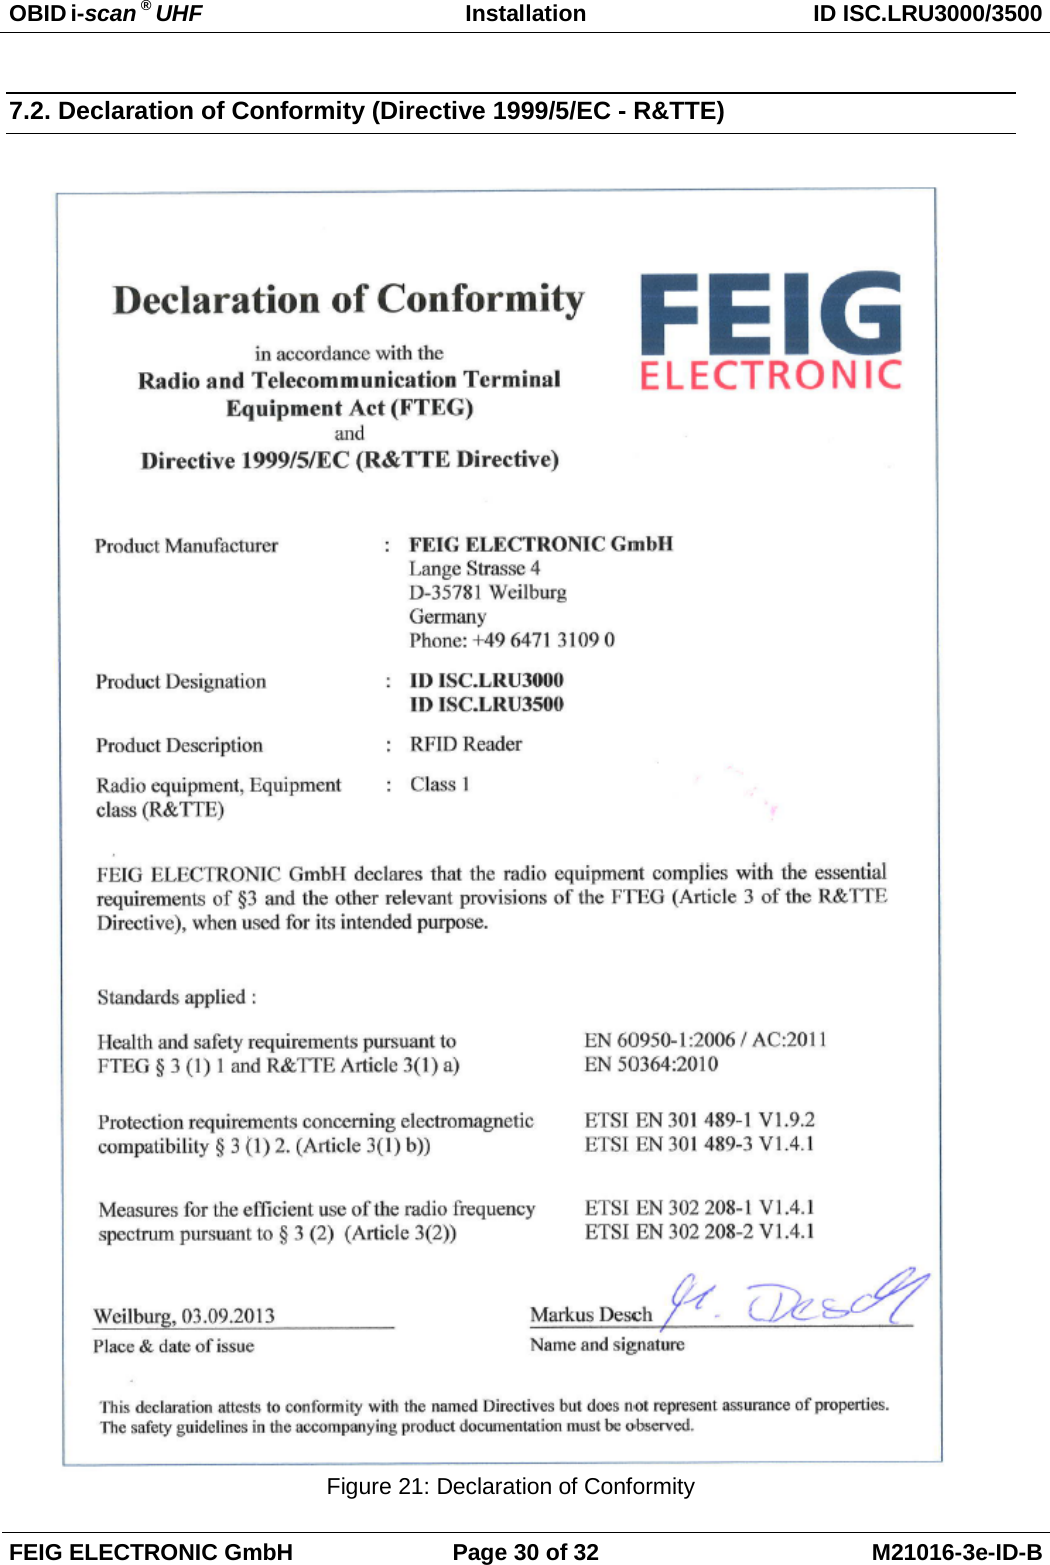 OBID i-scan ® UHF Installation ID ISC.LRU3000/3500  FEIG ELECTRONIC GmbH Page 30 of 32 M21016-3e-ID-B  7.2. Declaration of Conformity (Directive 1999/5/EC - R&amp;TTE)  Figure 21: Declaration of Conformity 